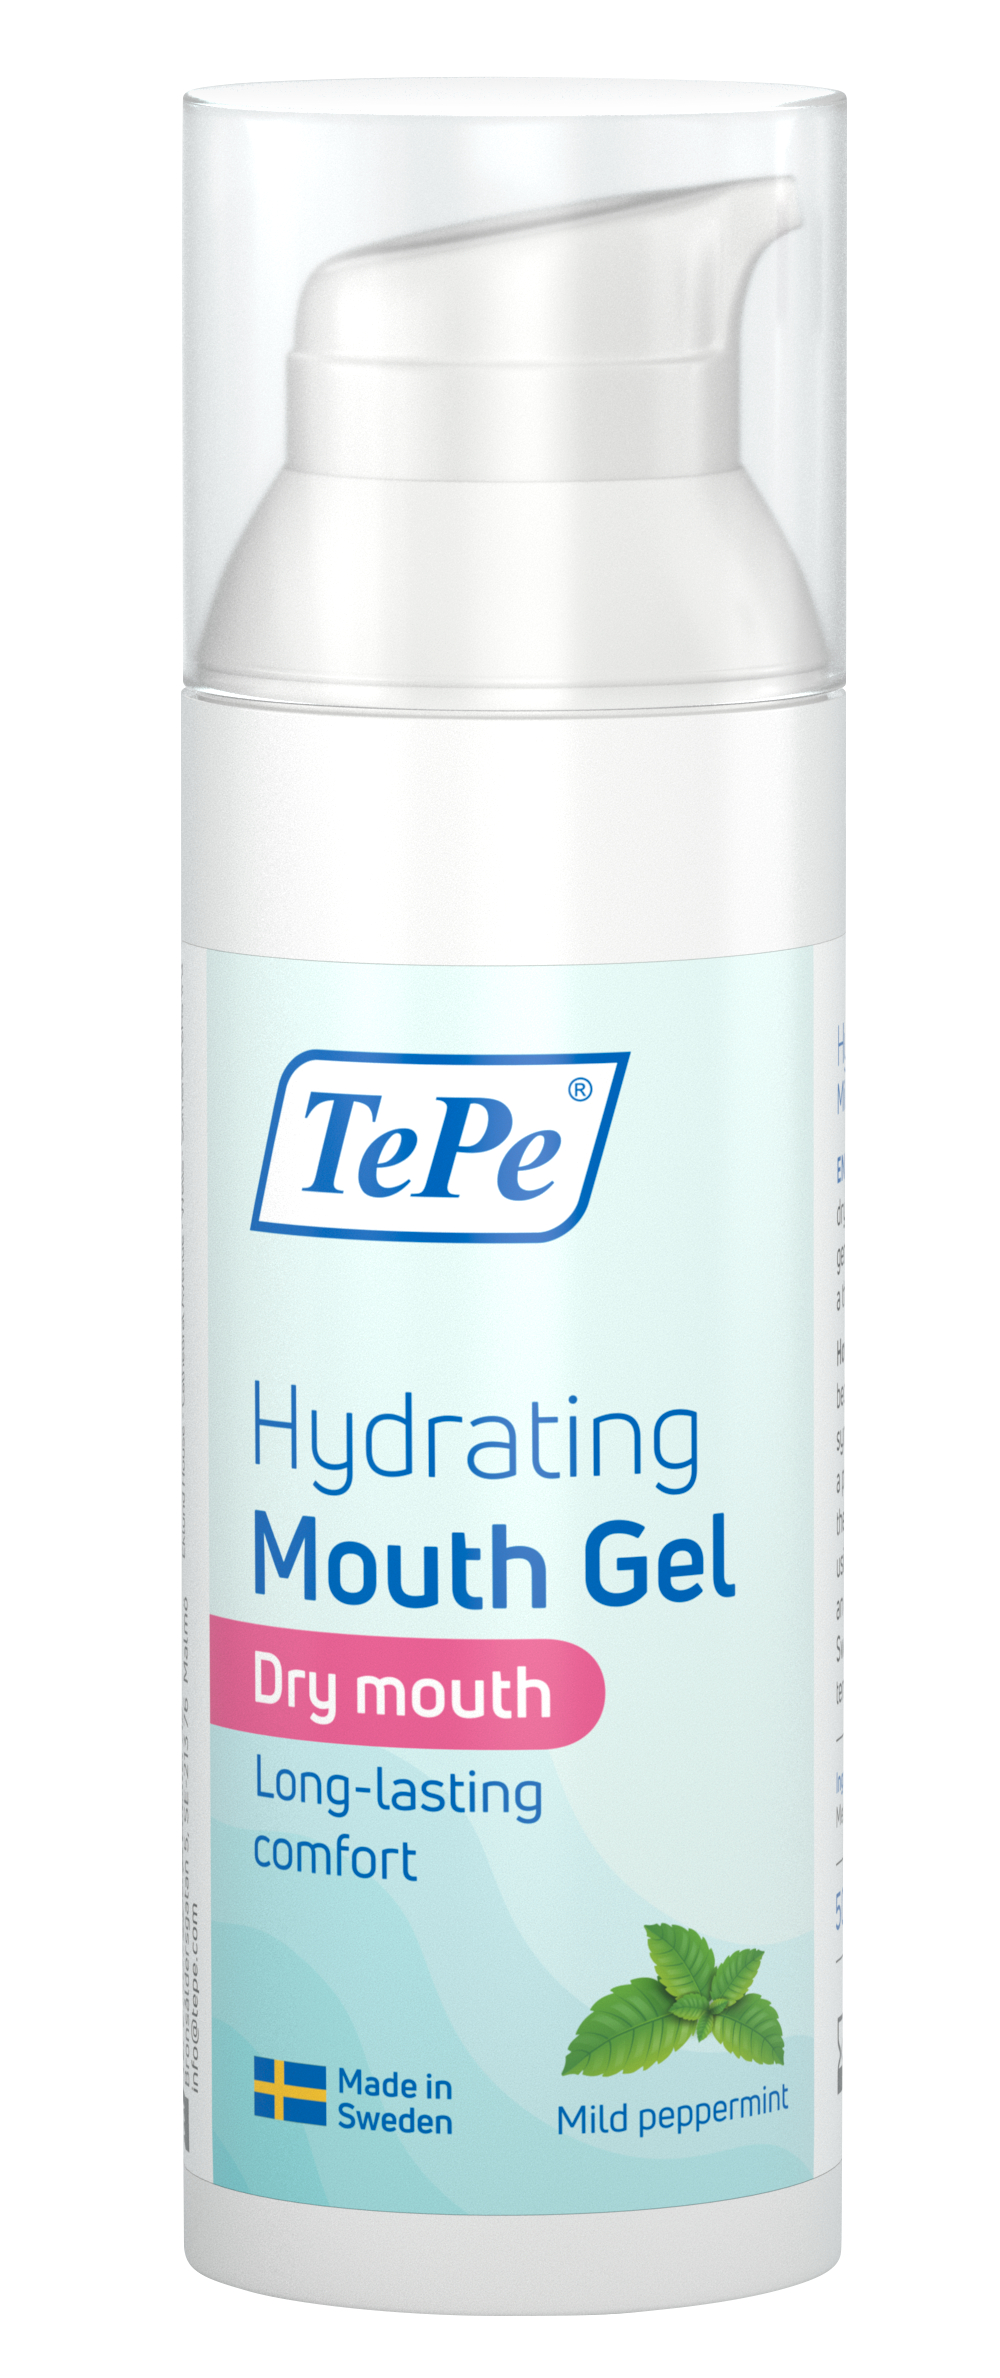 TePe PR Mouth Gel Mild Peppermint 842314 Front 10508 High resolution JPEG 2805